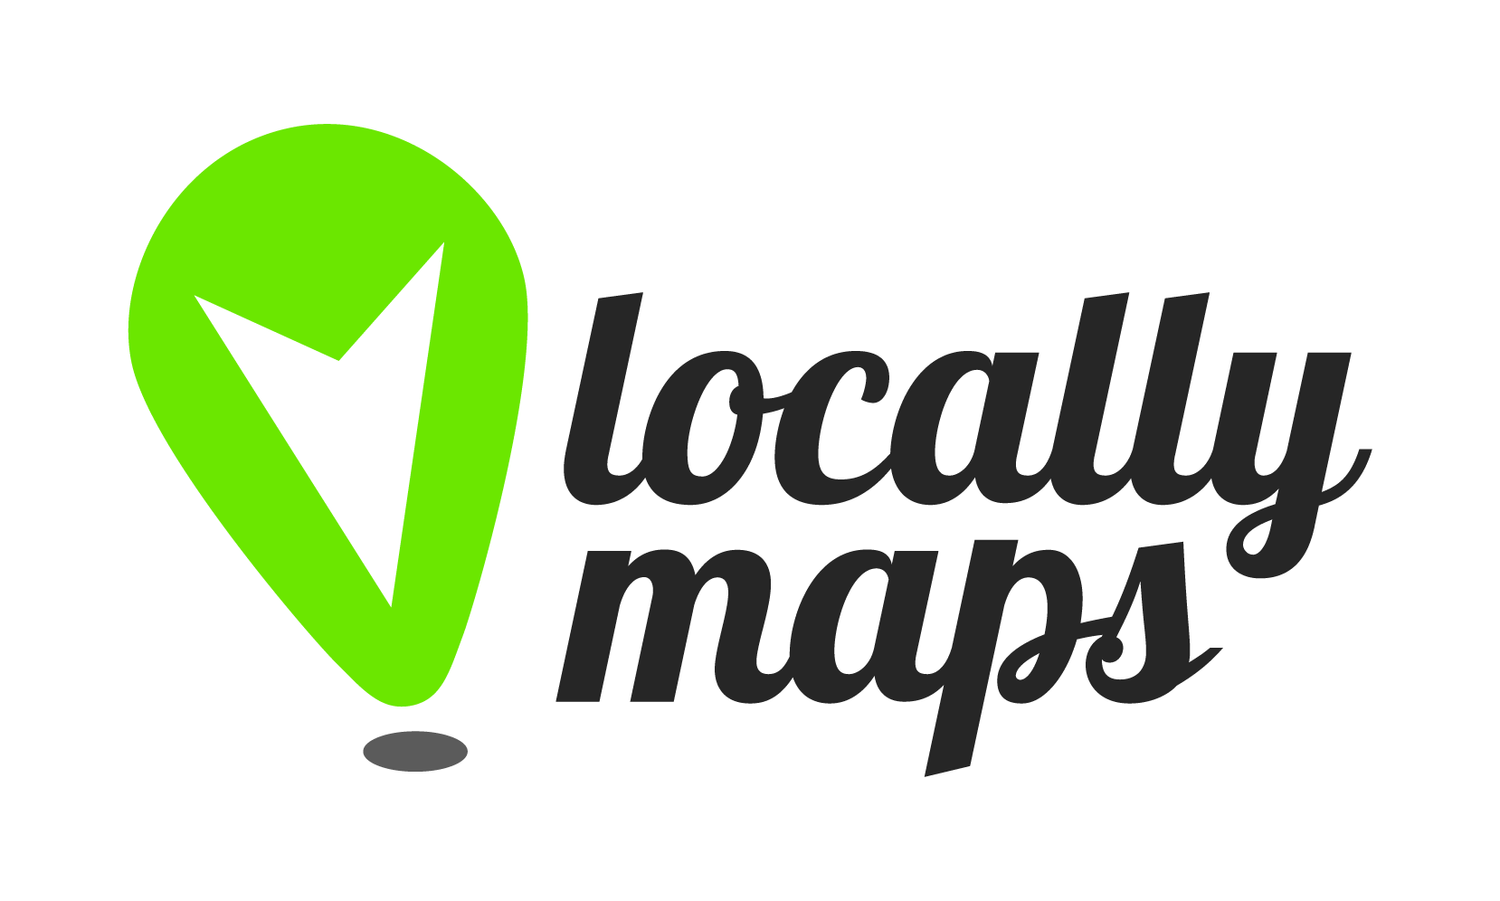 Locally Maps